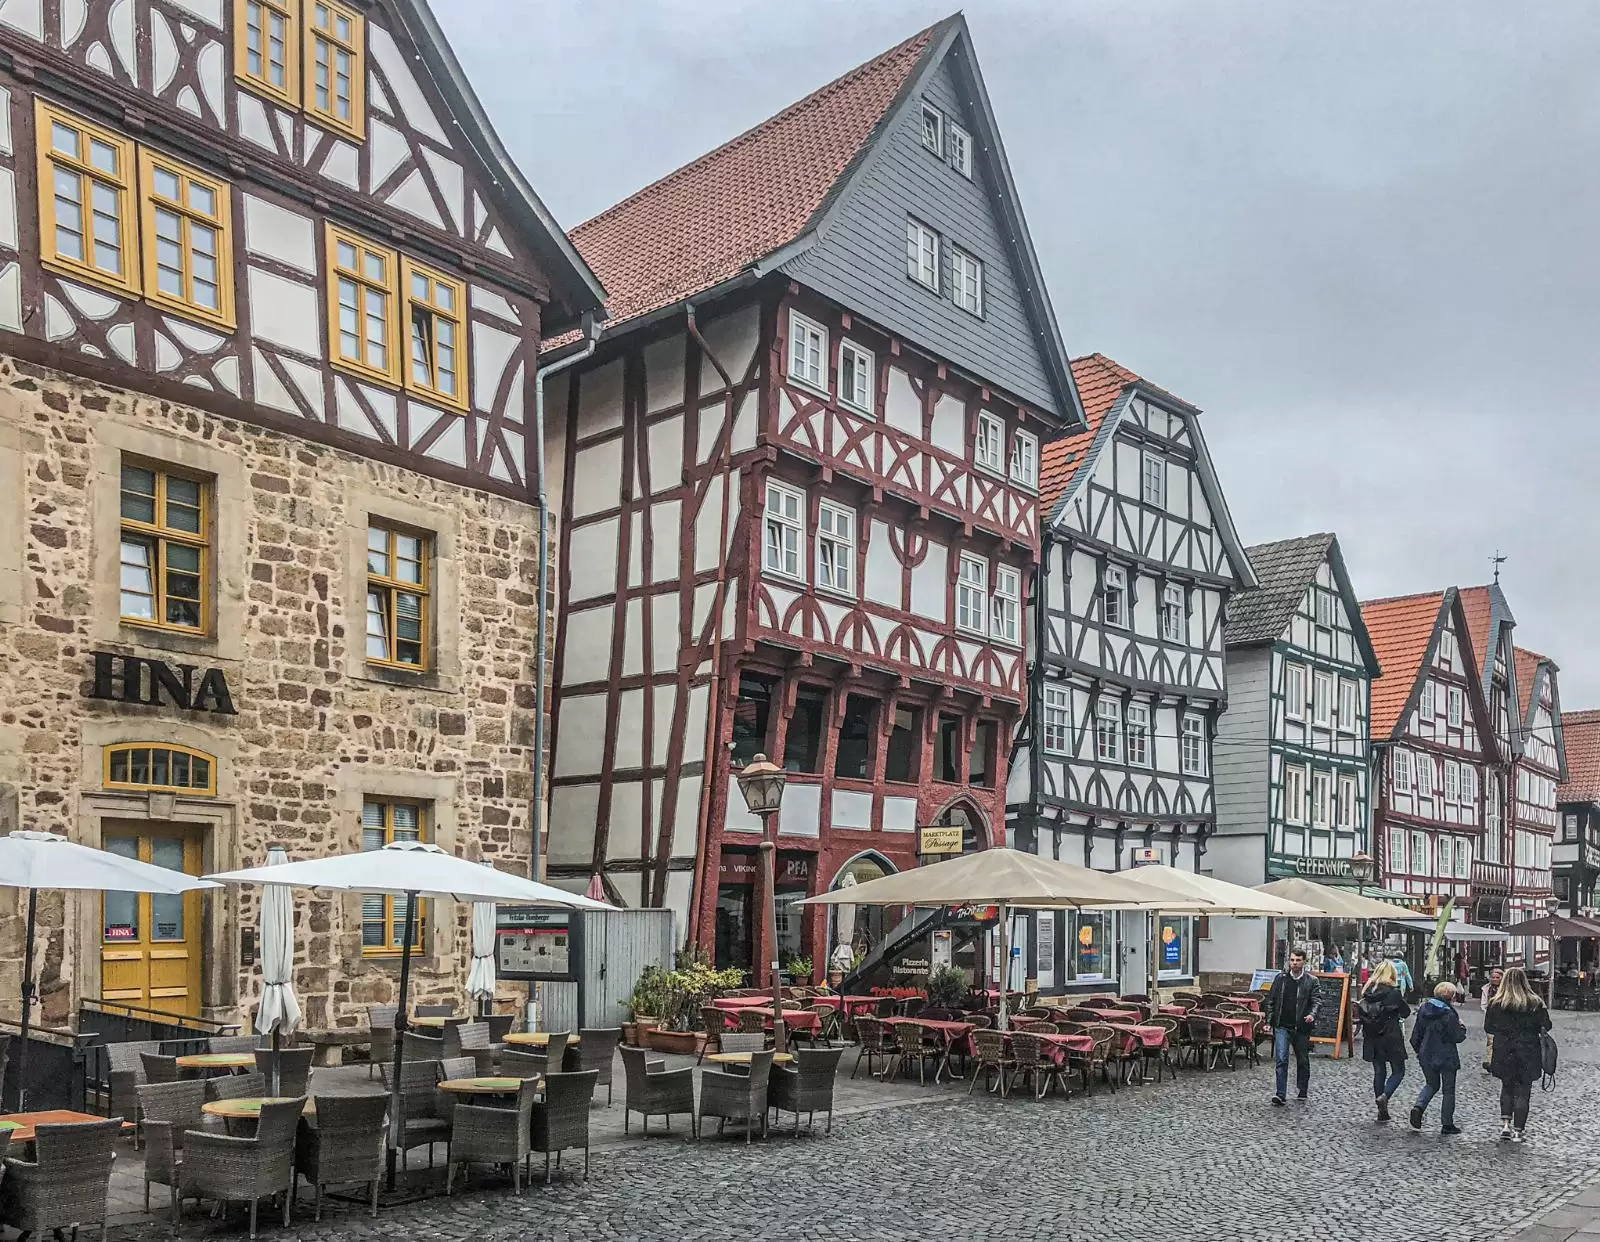 Fritzlar Old Town